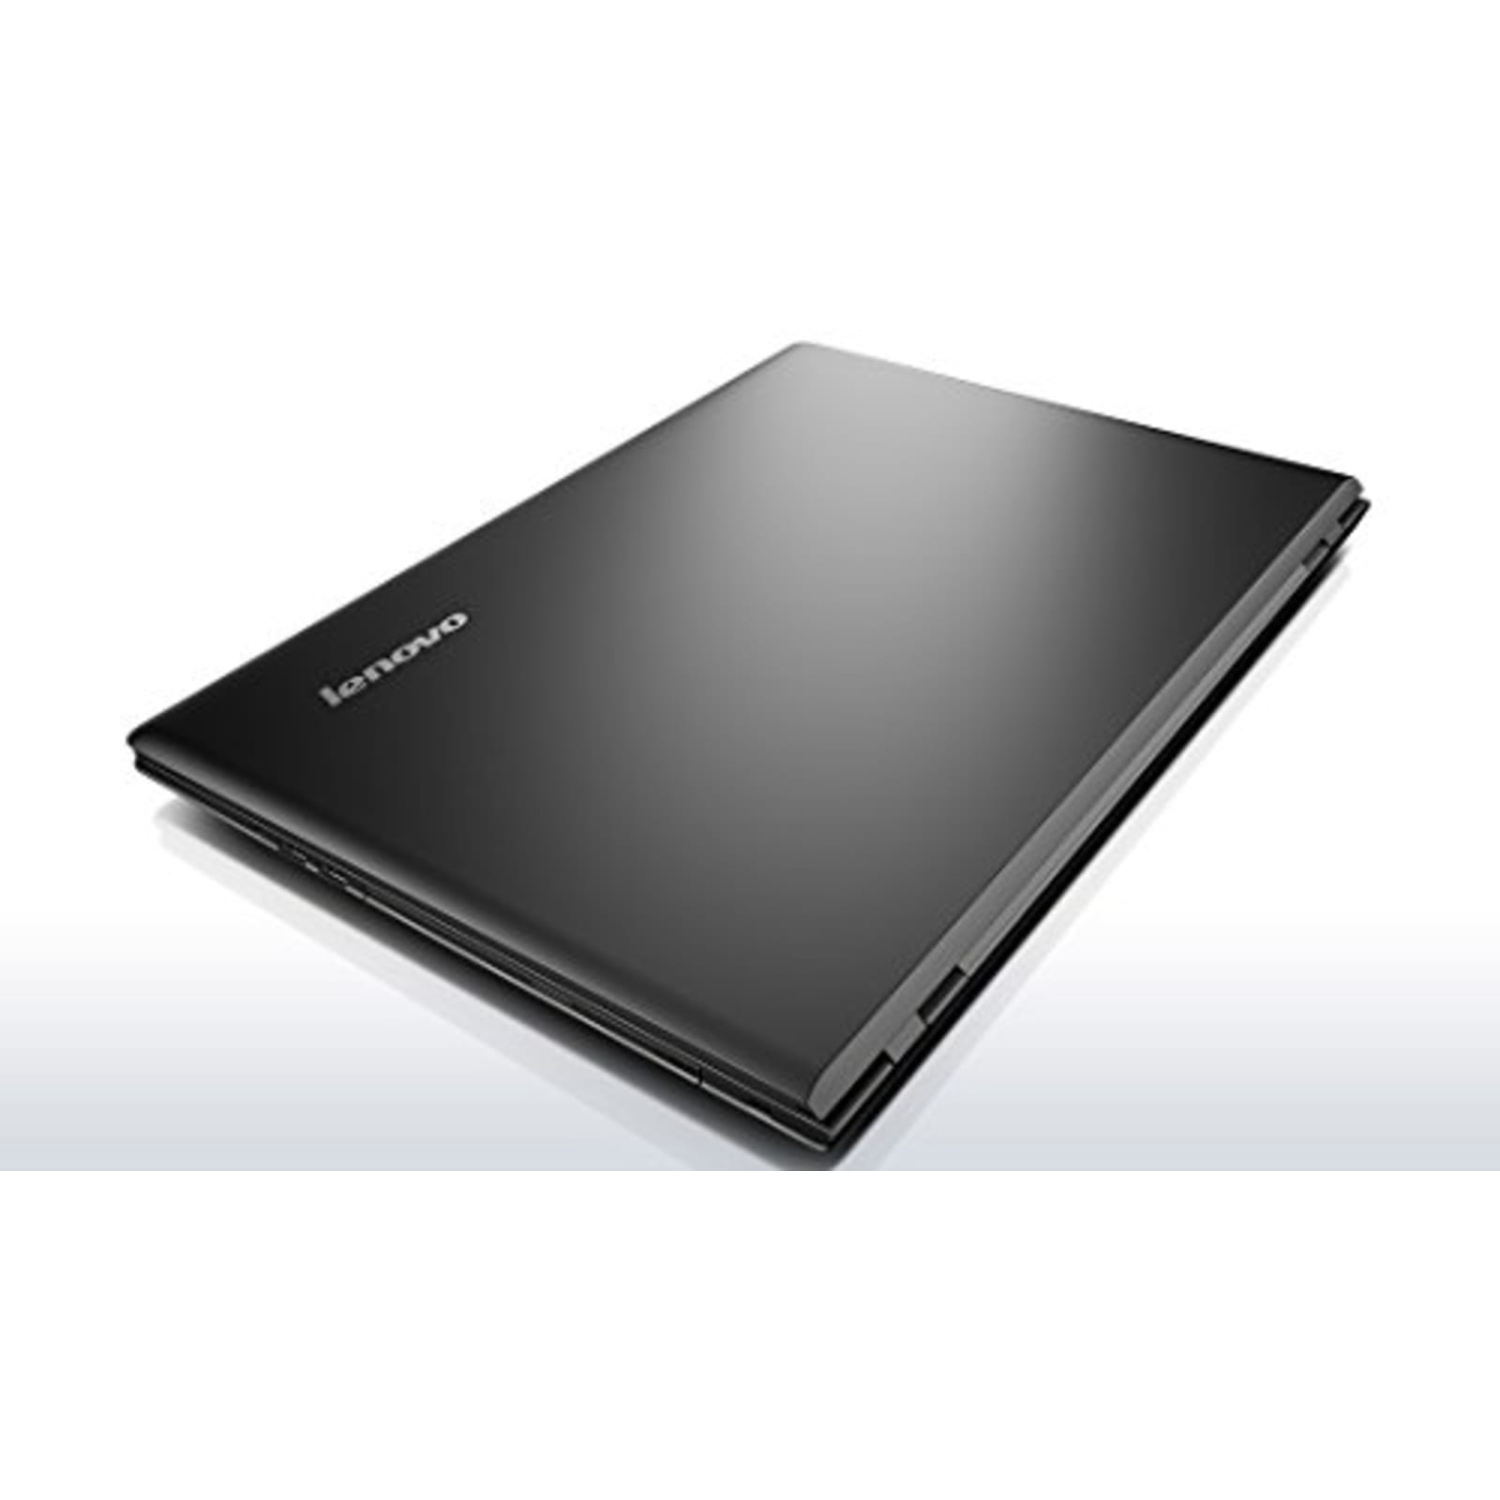 Refurbished (Excellent) Lenovo IdeaPad 300 17 Laptop | 17.3" 1600x900 HD+ | Core i7-6500U - 1TB HDD Hard Drive - 8GB RAM | 2 cores @ 3.1 GHz Win 10 Home Black